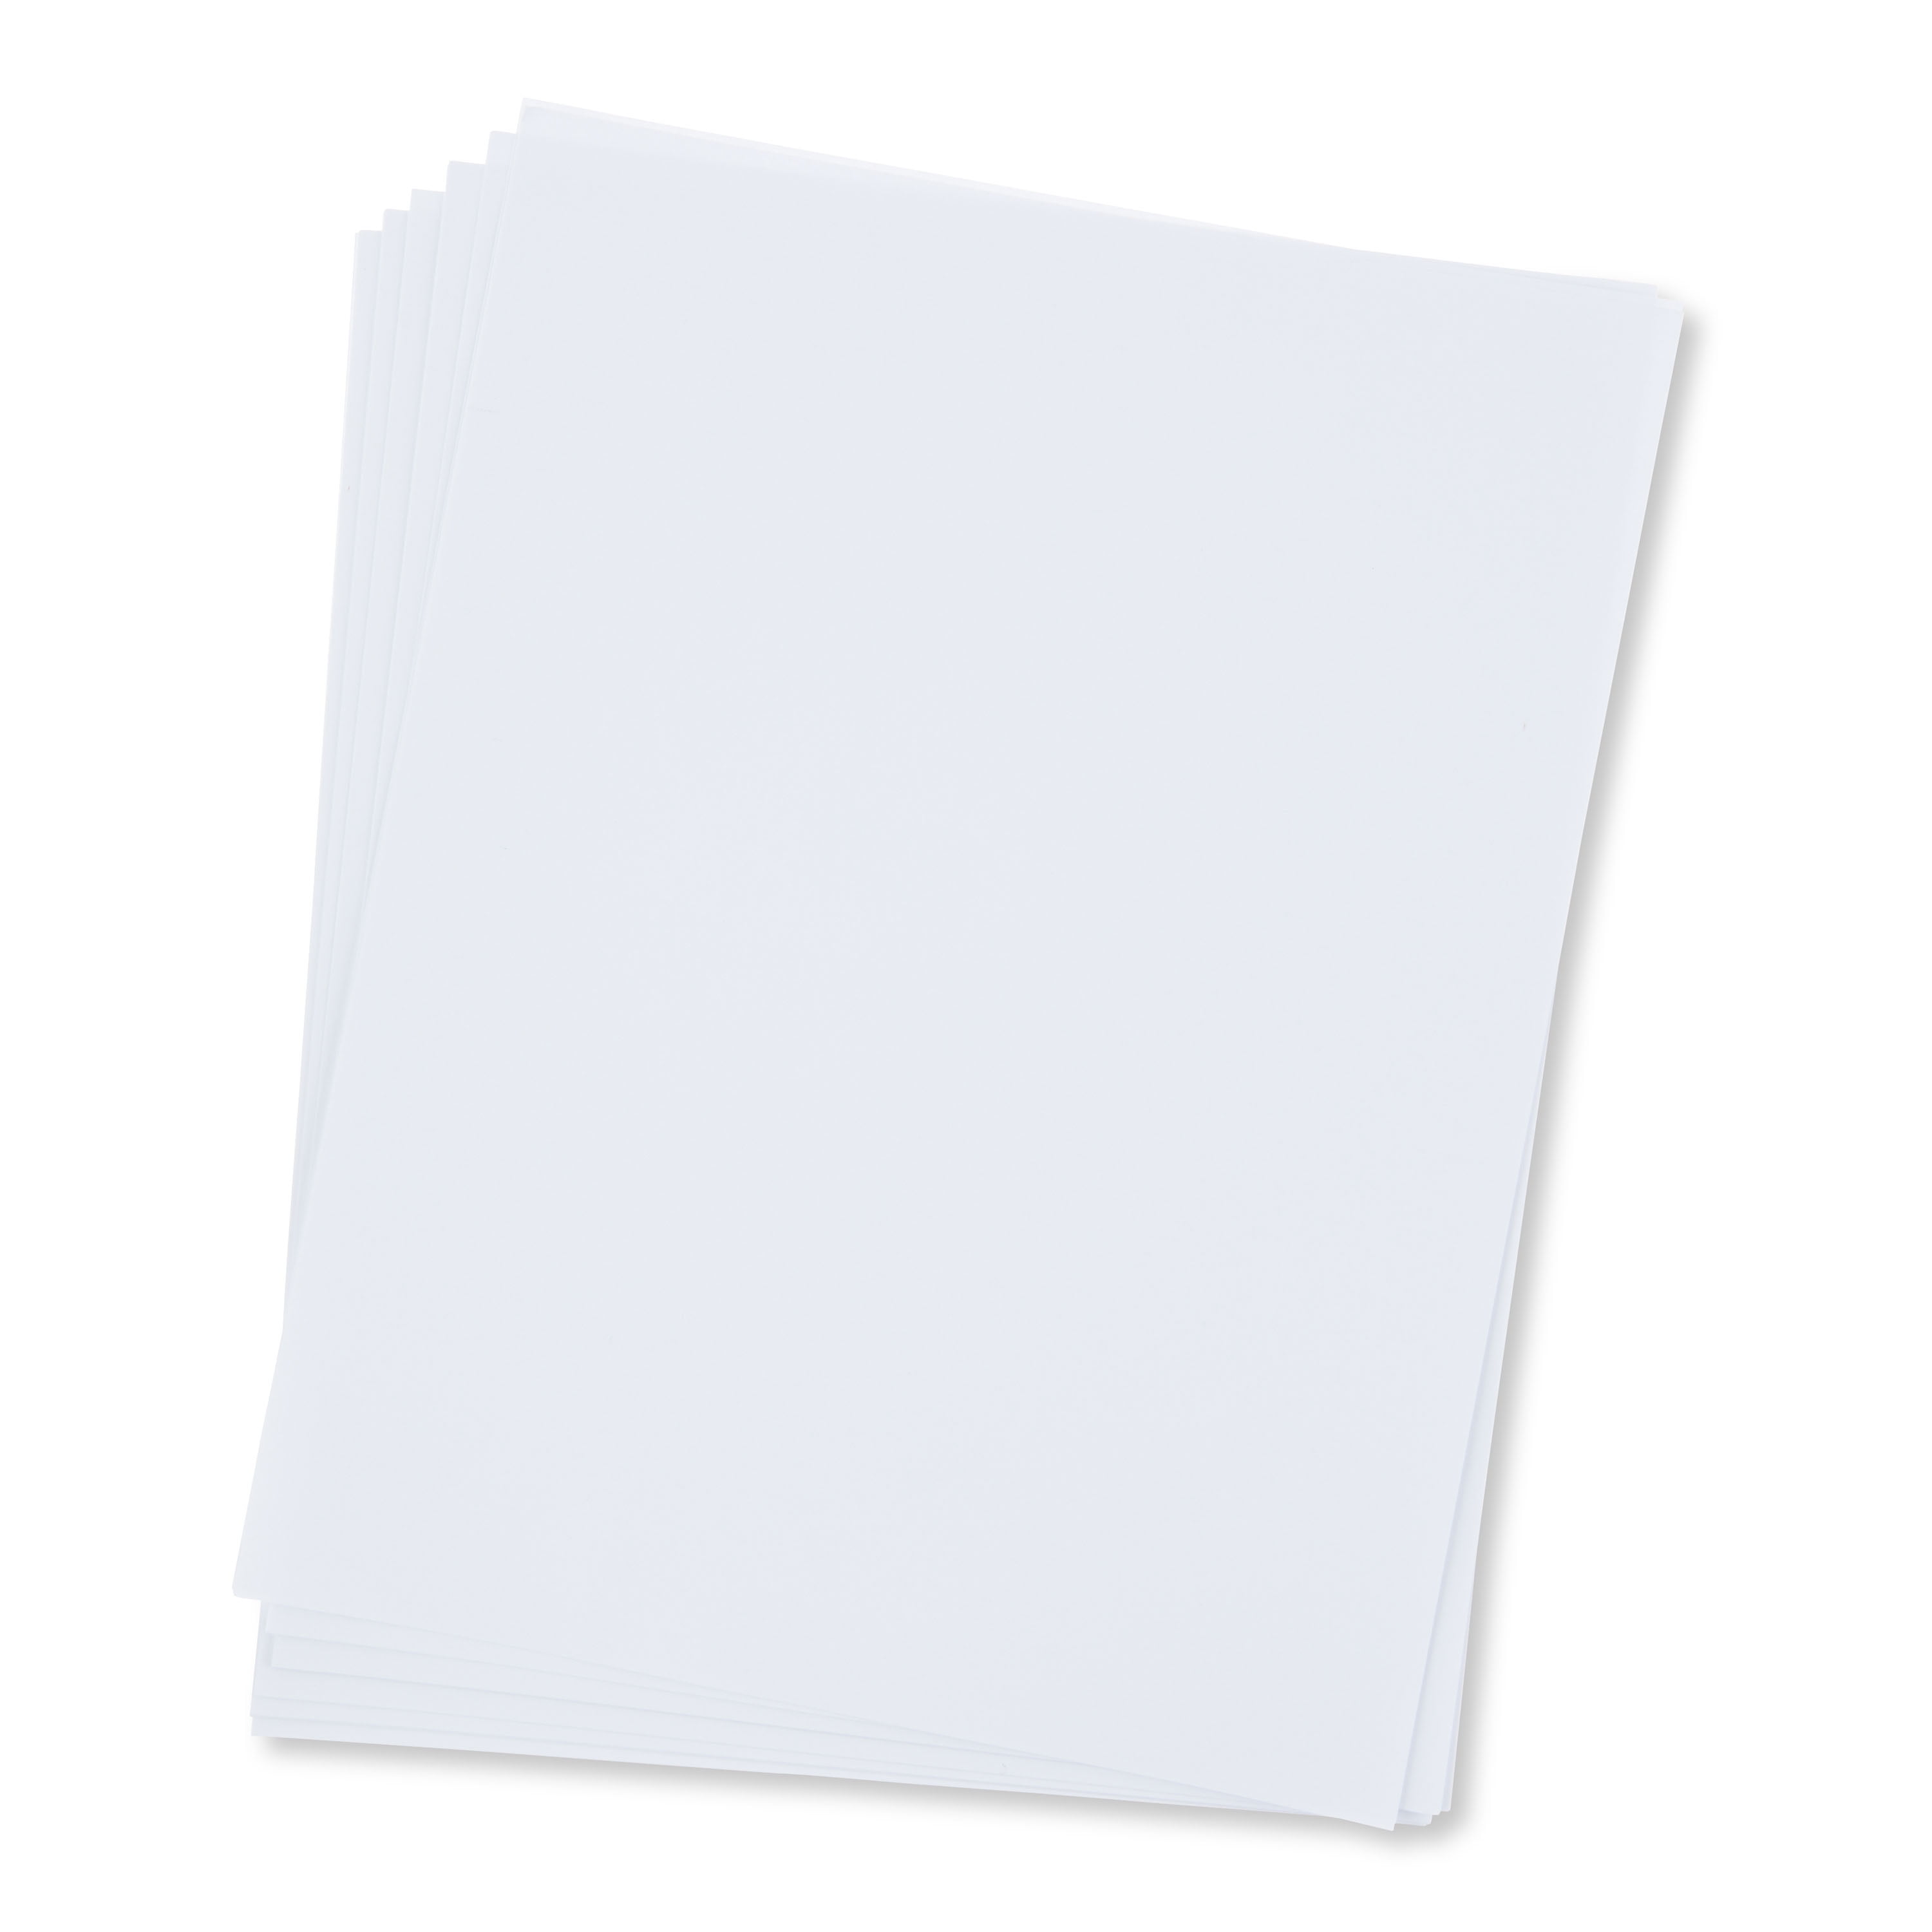 Basics Multipurpose Copy Printer Paper - White, 8.5 x 11 Inches, 1  Ream (500 Sheets)